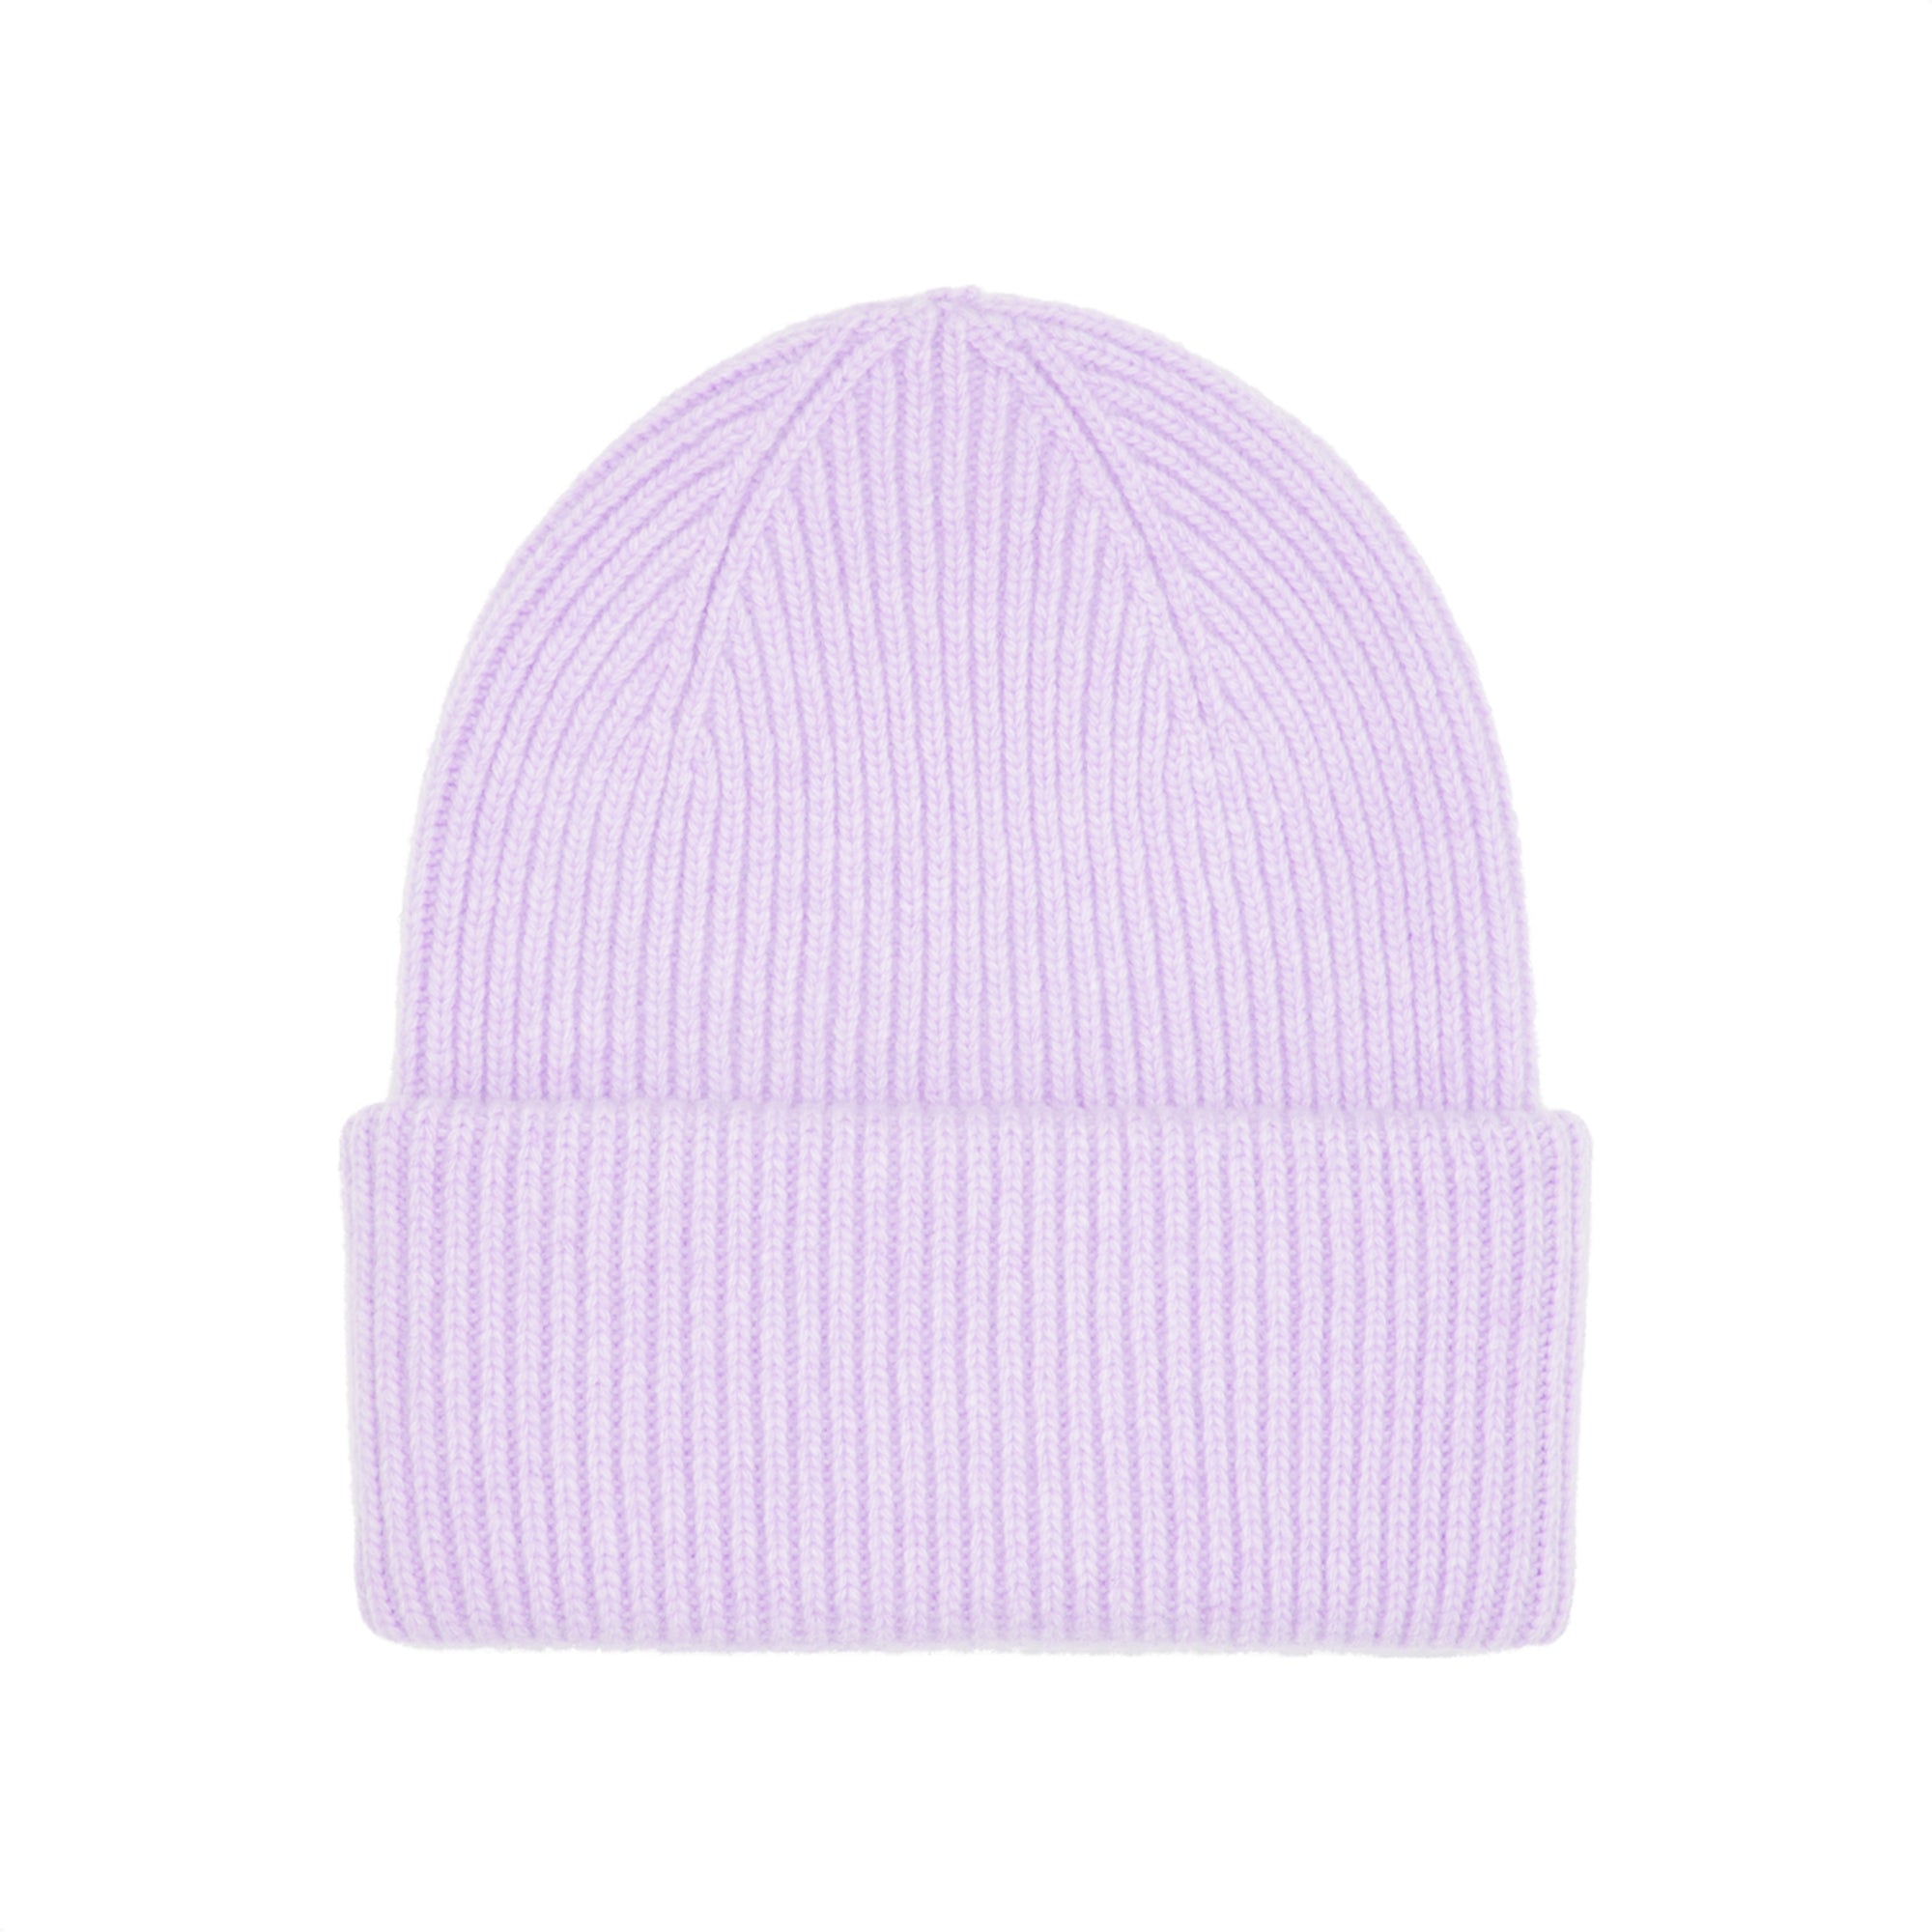 Colorful Standard Merino Wool Hat - Soft Lavender